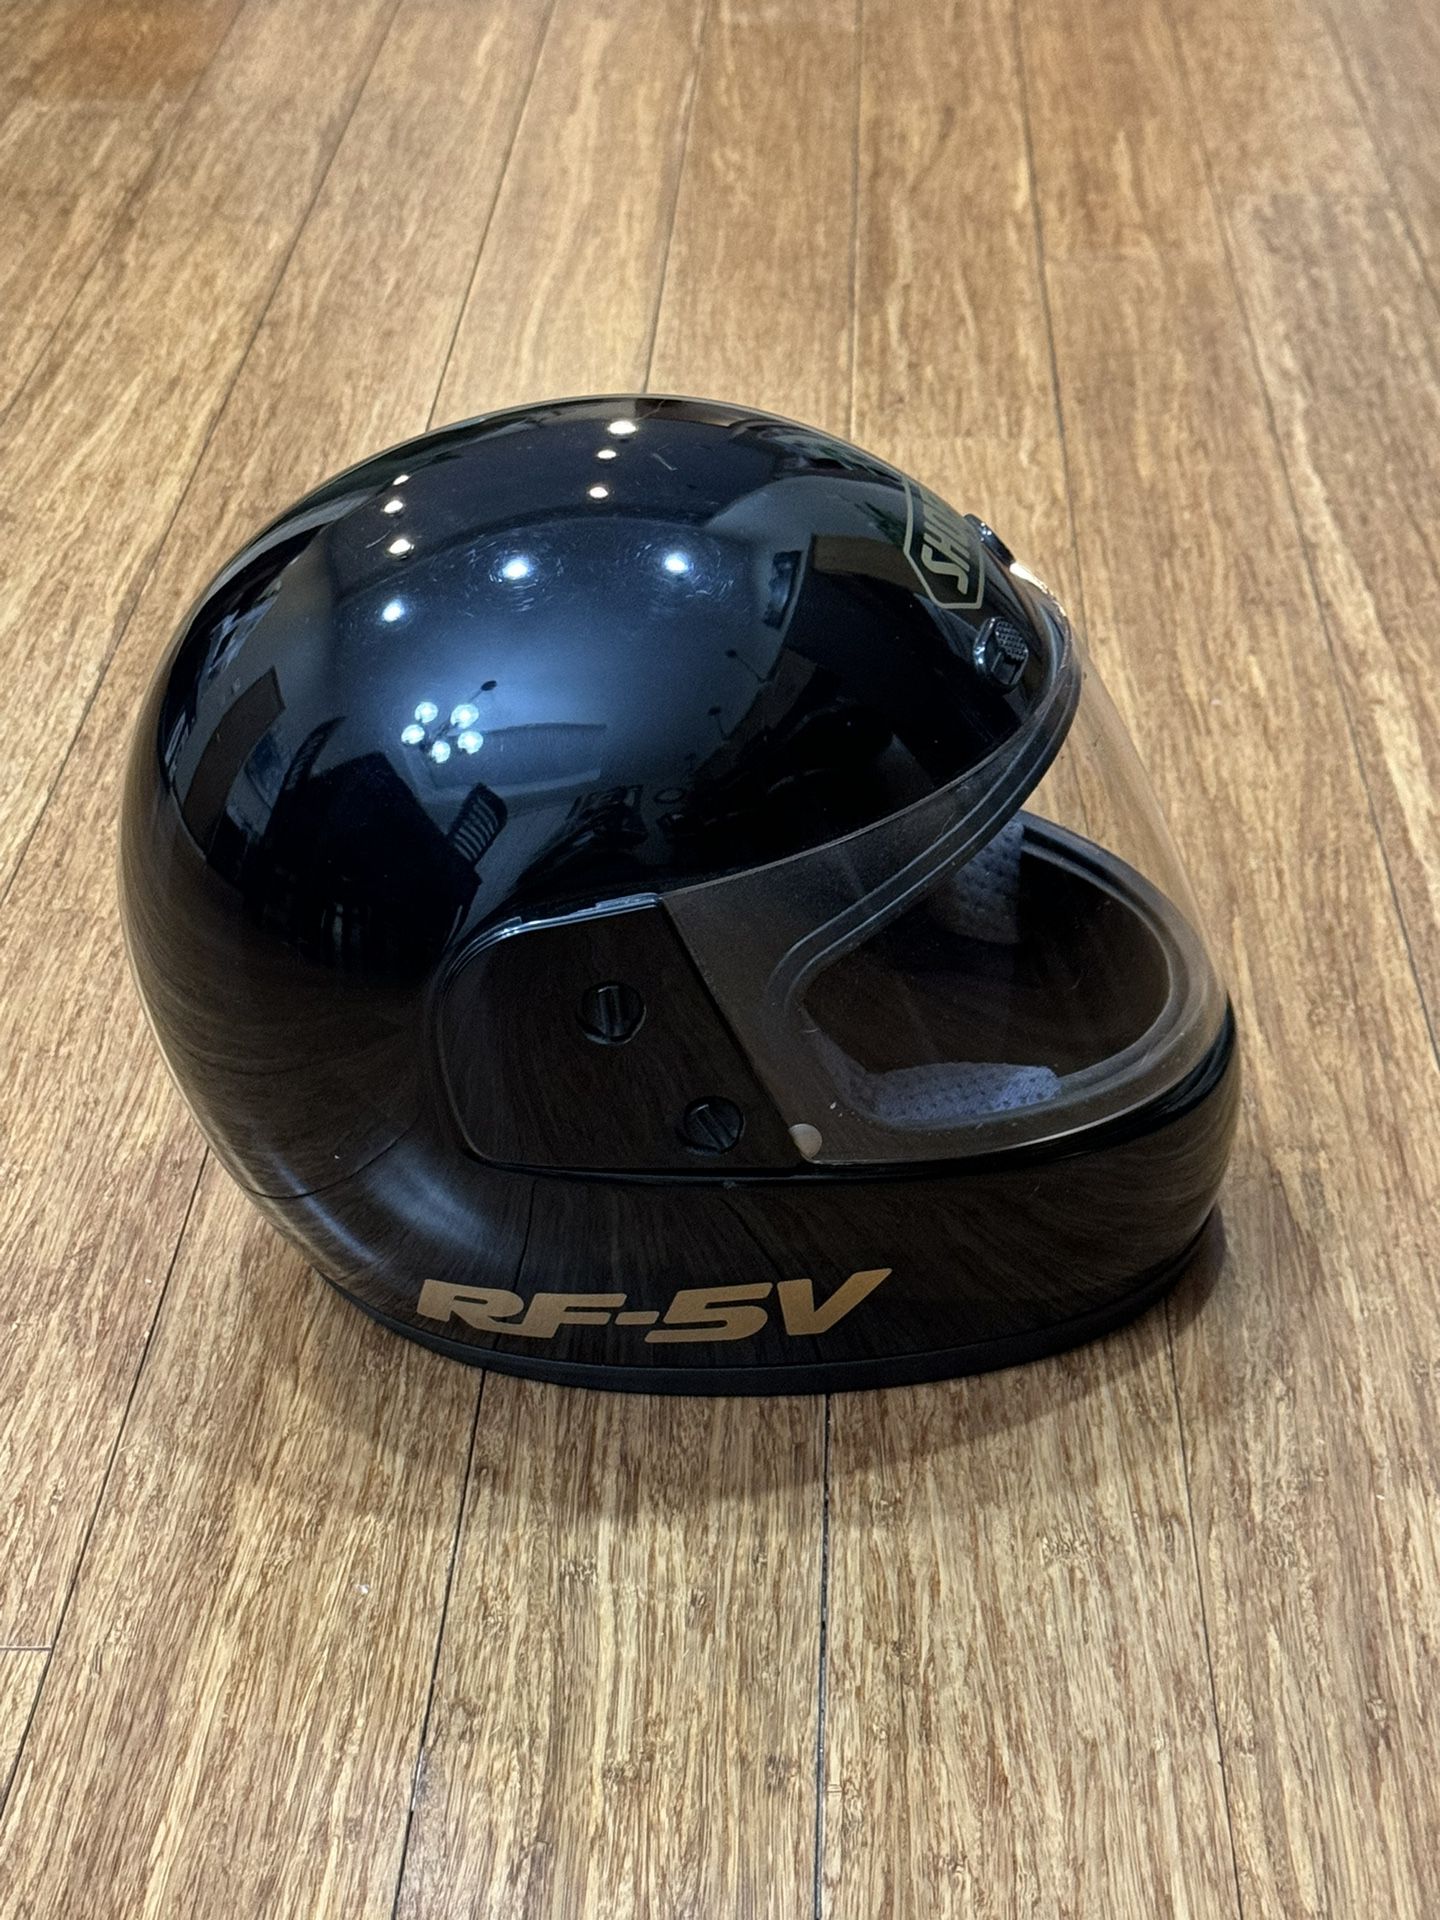 Motor Cycle Helmet—Adult Size Small 6 7/8 - 7 (Read Description)